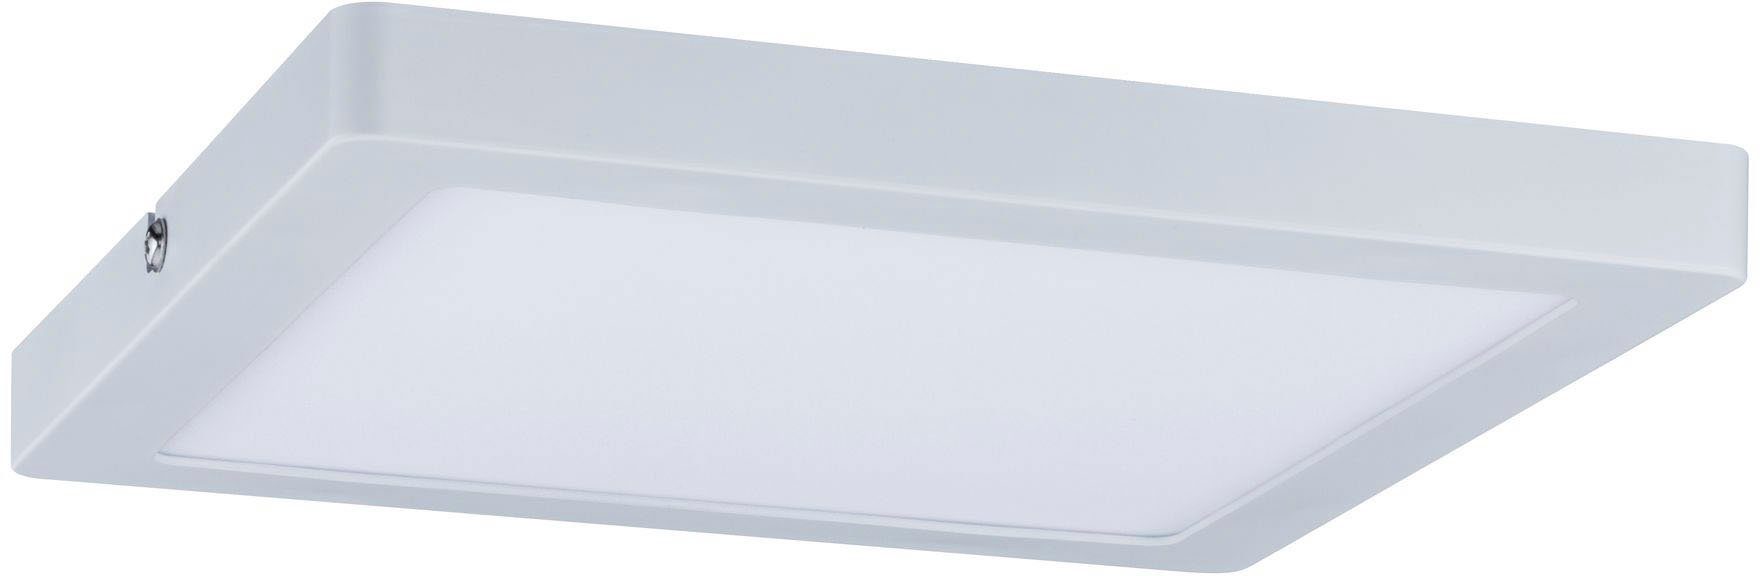 Paulmann LED Panel Atria eckig 220x220mm 14W 2.700K Weiß matt, LED fest  integriert, Warmweiß, Atria eckig 220x220mm 14W 2.700K Weiß matt,  Gleichmäßiges Raumlicht auf Basis modernster LED-Technik